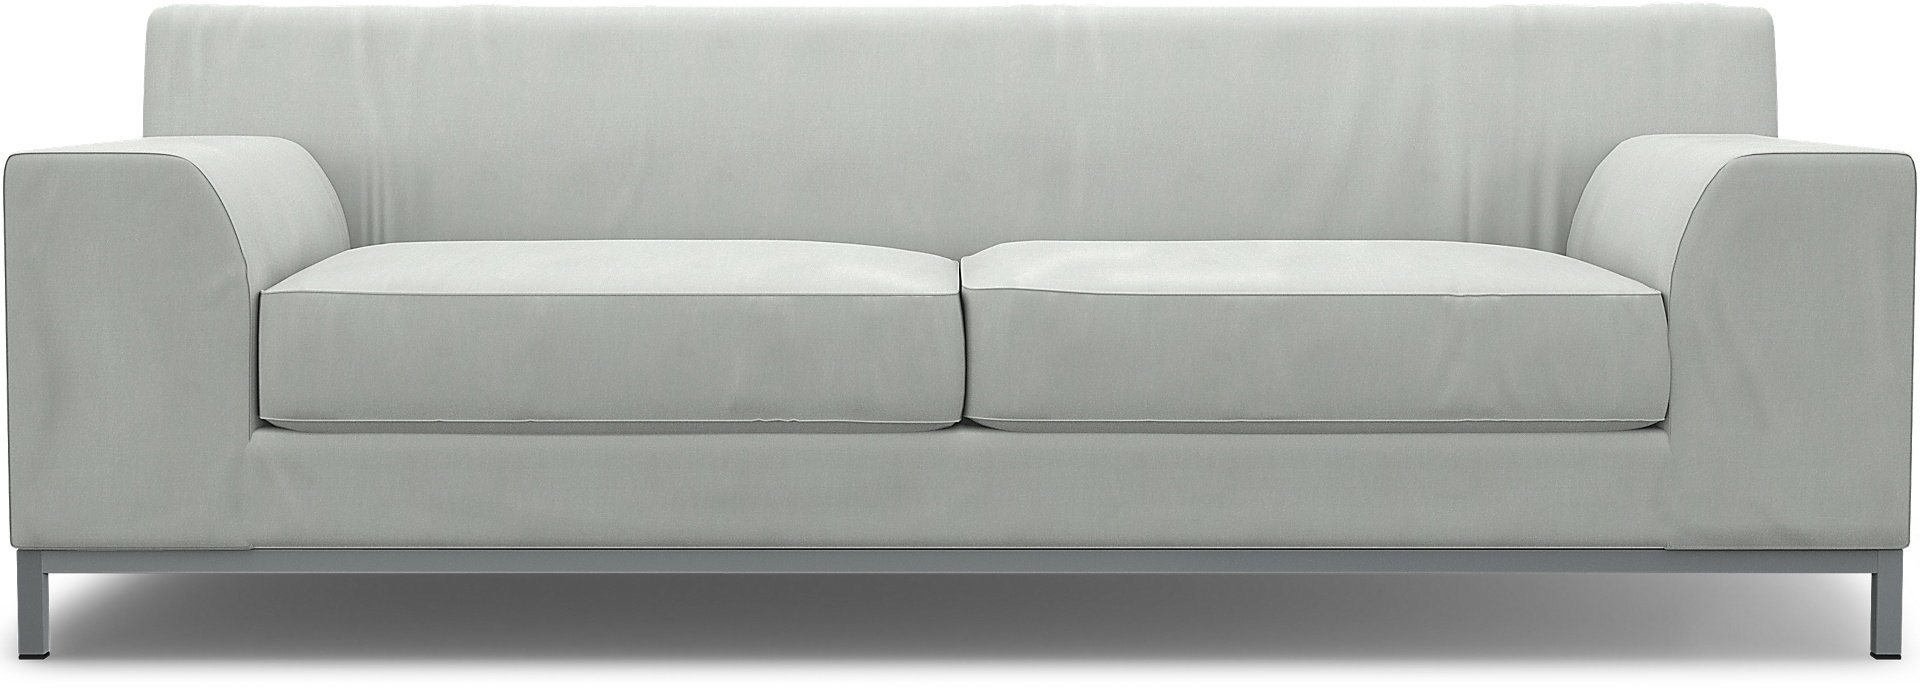 IKEA - Kramfors 3 Seater Sofa Cover, Silver Grey, Linen - Bemz